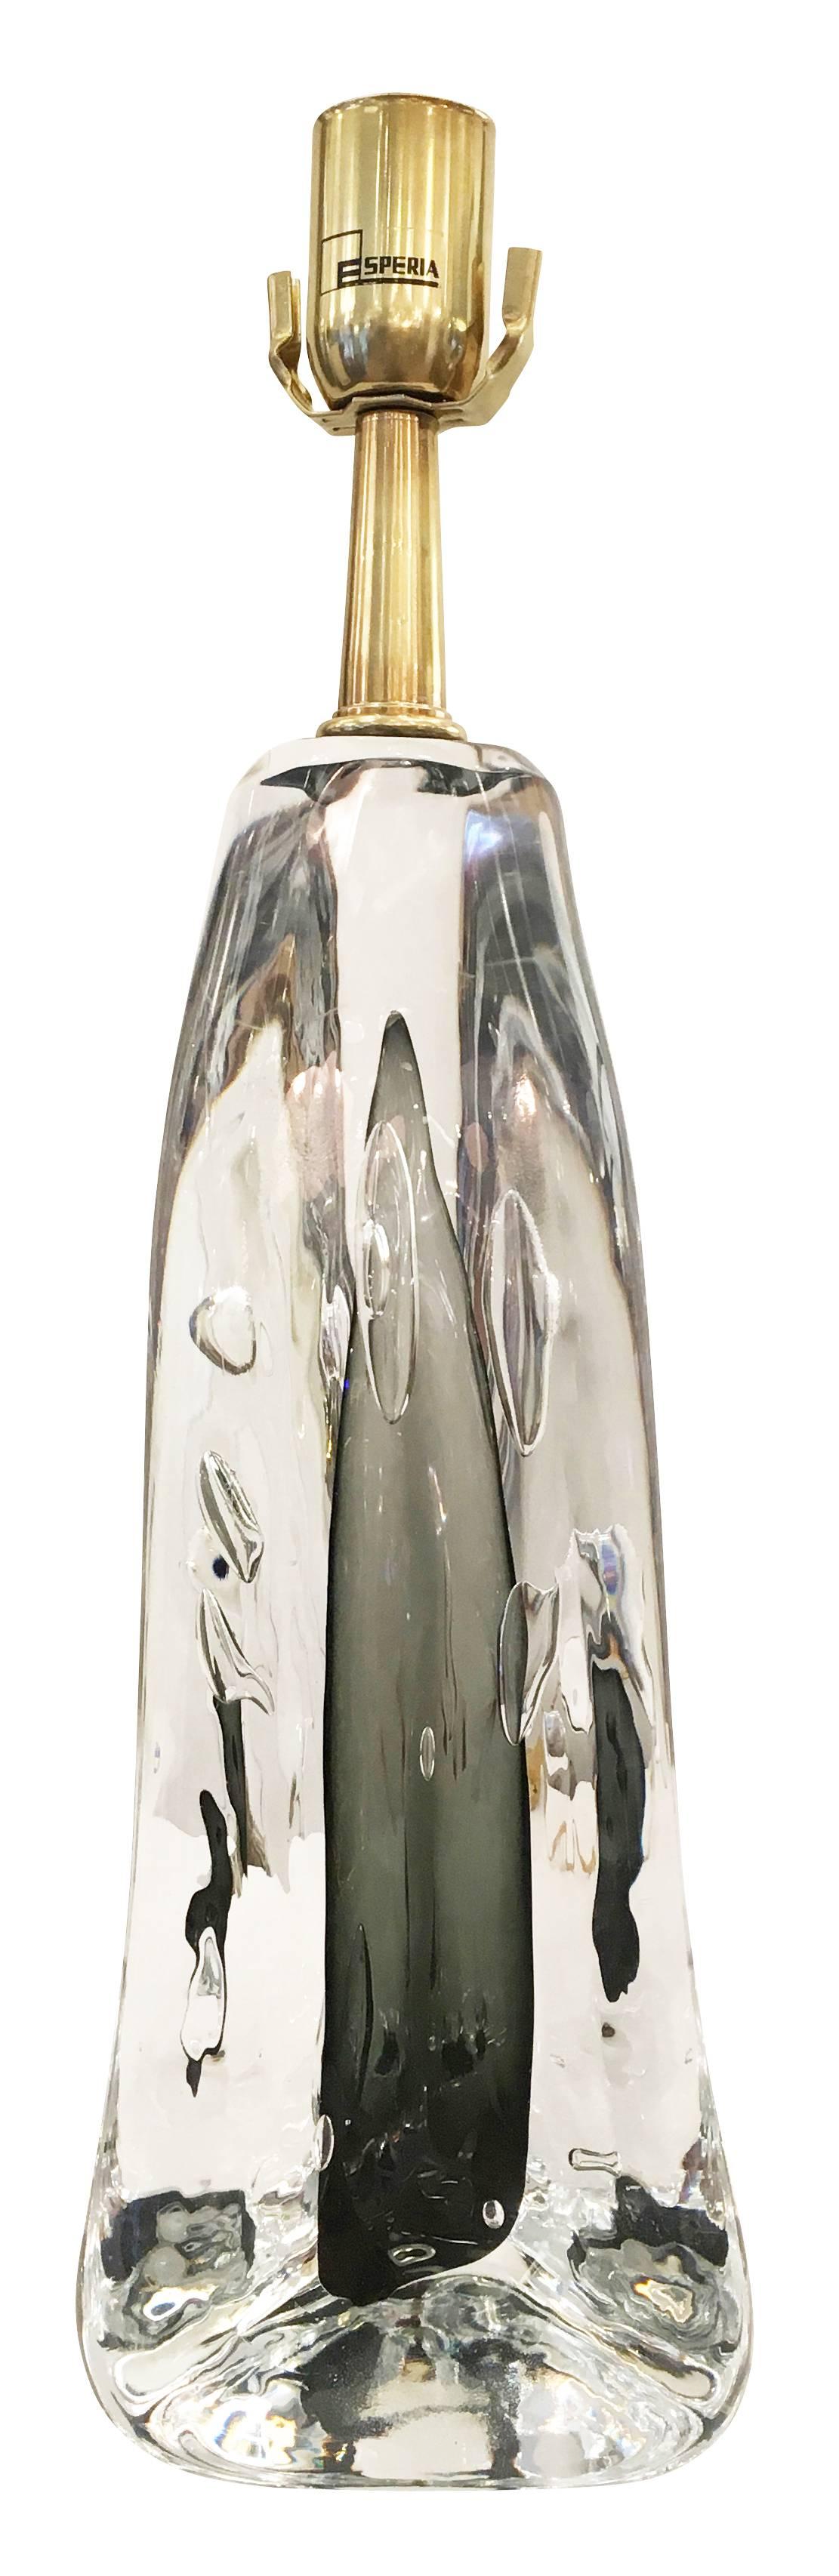 Italian “Bolla” Infused Glass Table Lamp by Esperia  for Gaspare Asaro